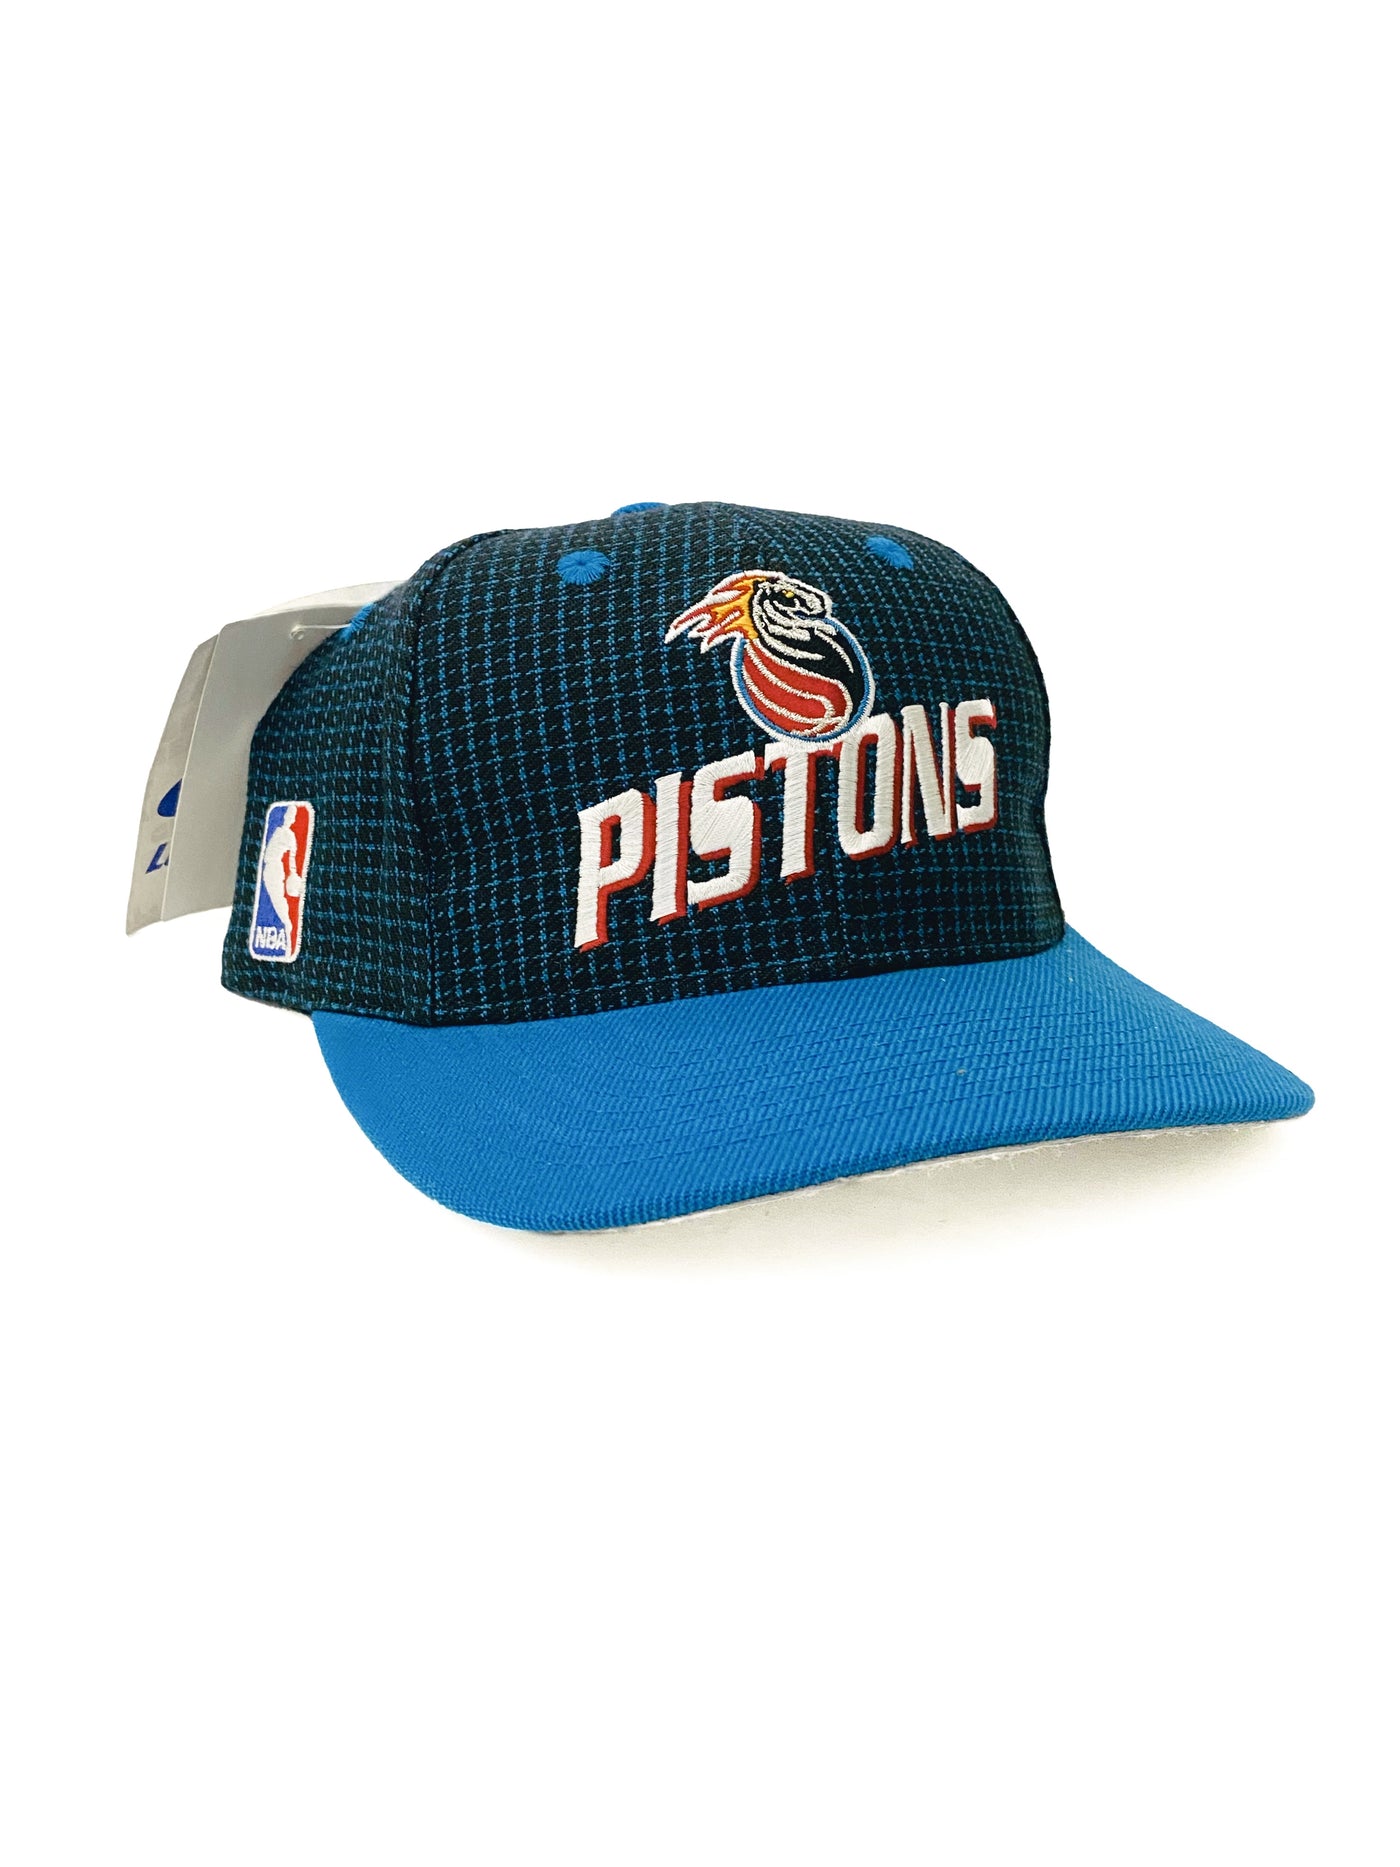 Vintage 90s Detroit Pistons Logo Athletic Snapback